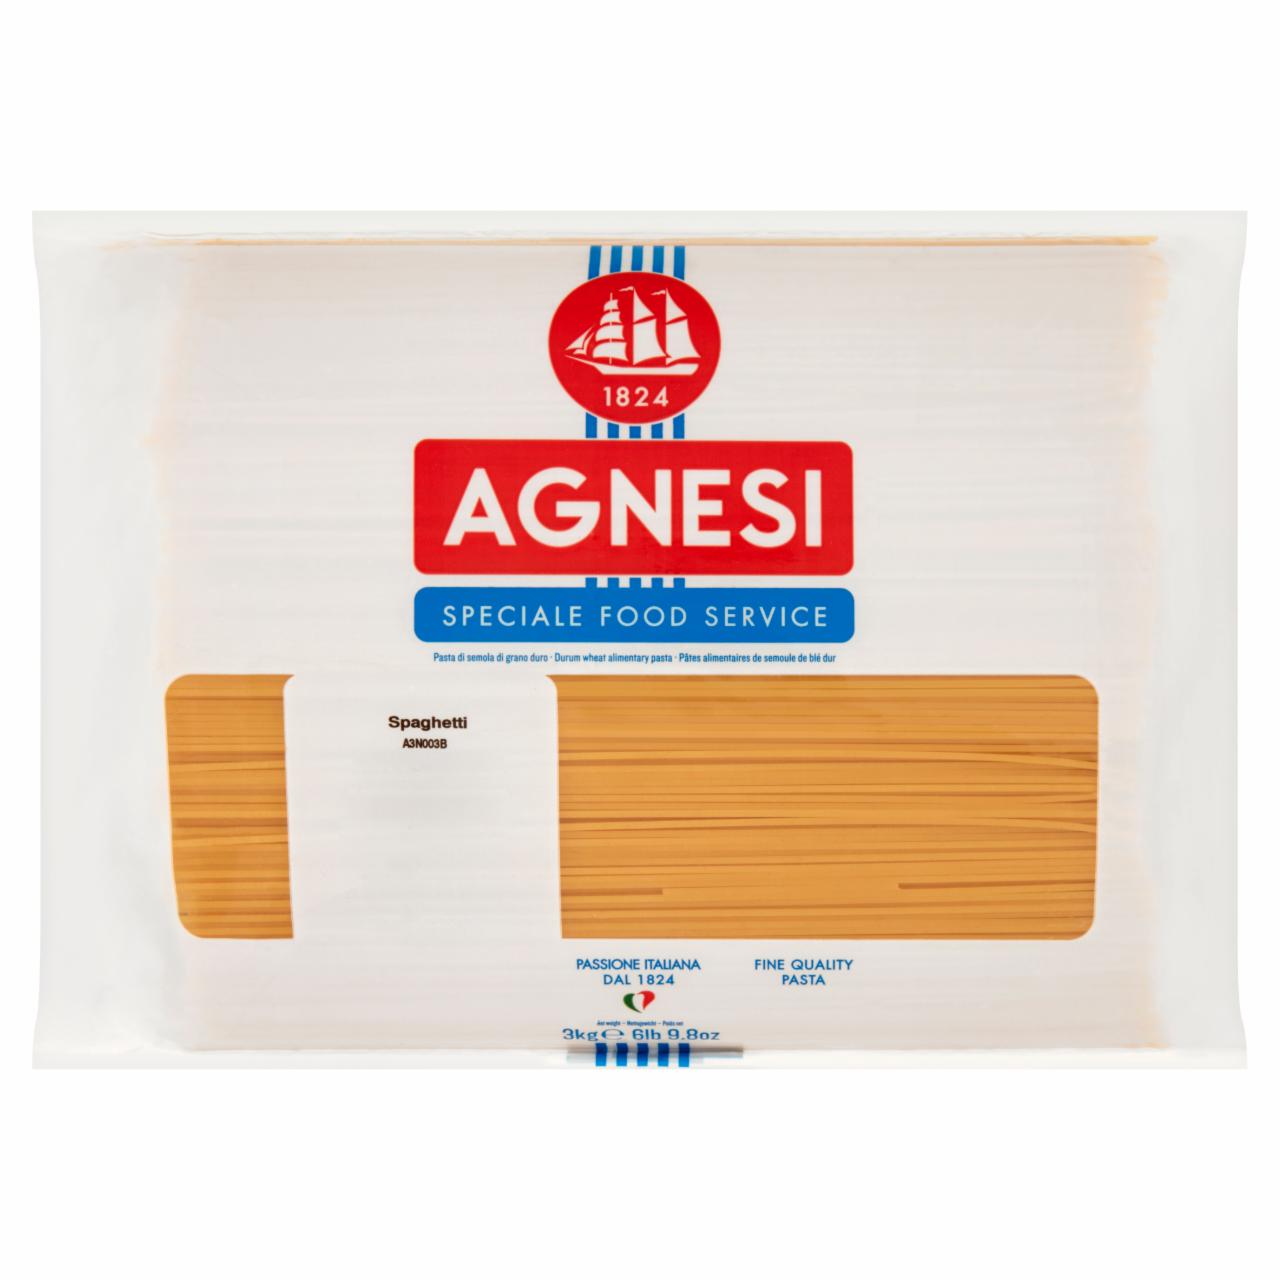 Photo - Agnesi Spaghetti Pasta 3 kg